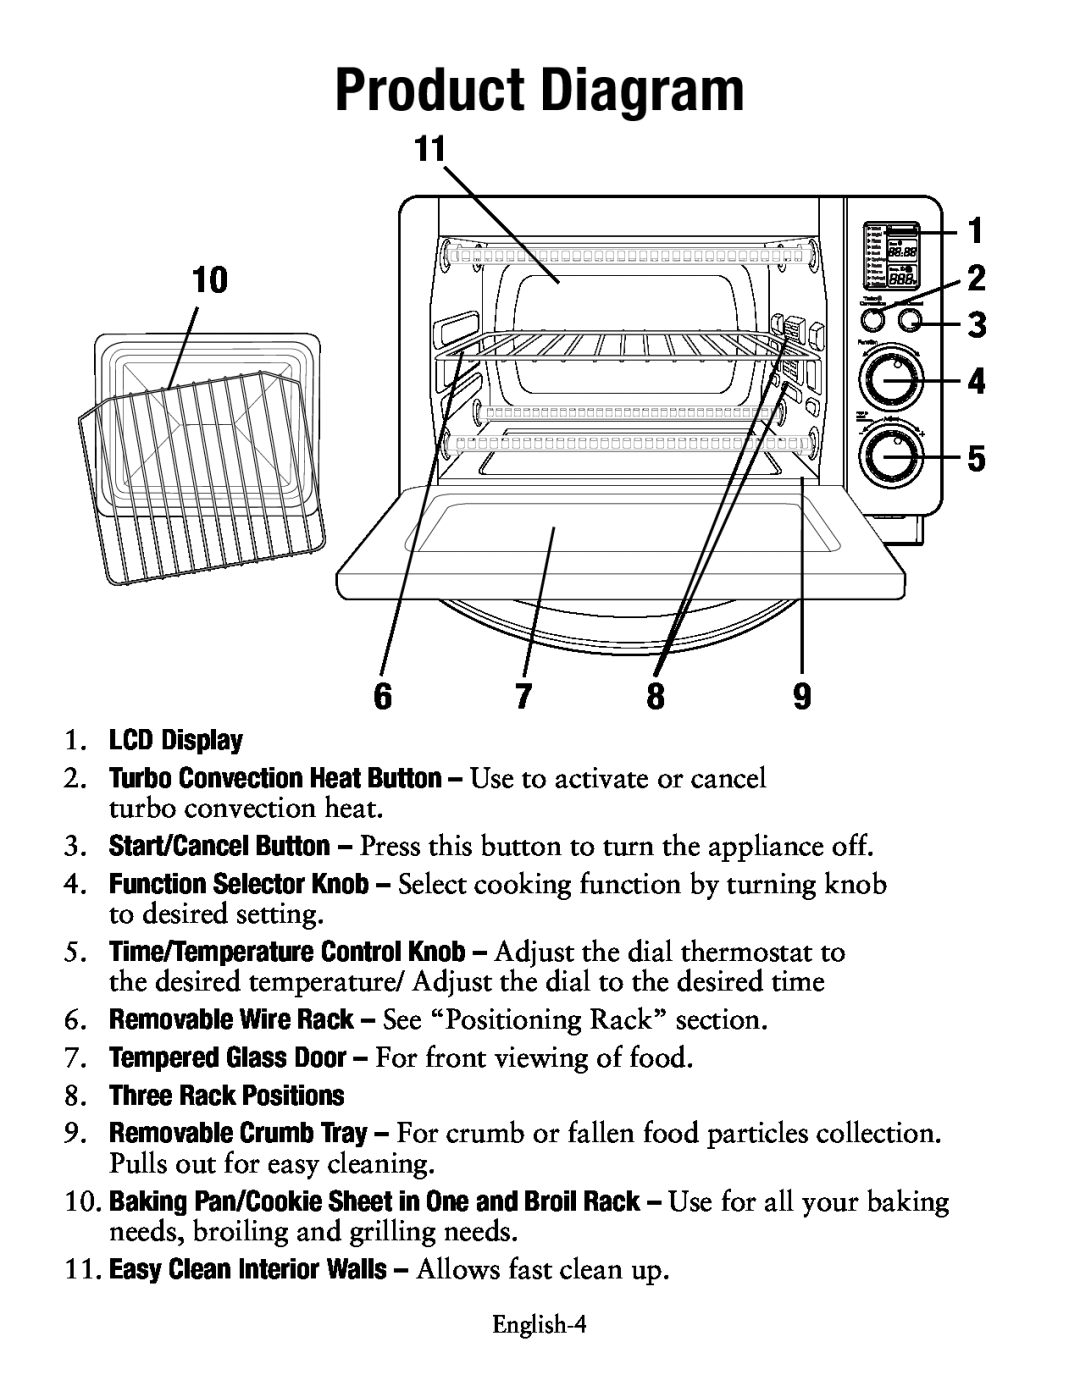 Oster TSSTTVDG01, Digital Countertop Oven user manual Product Diagram 